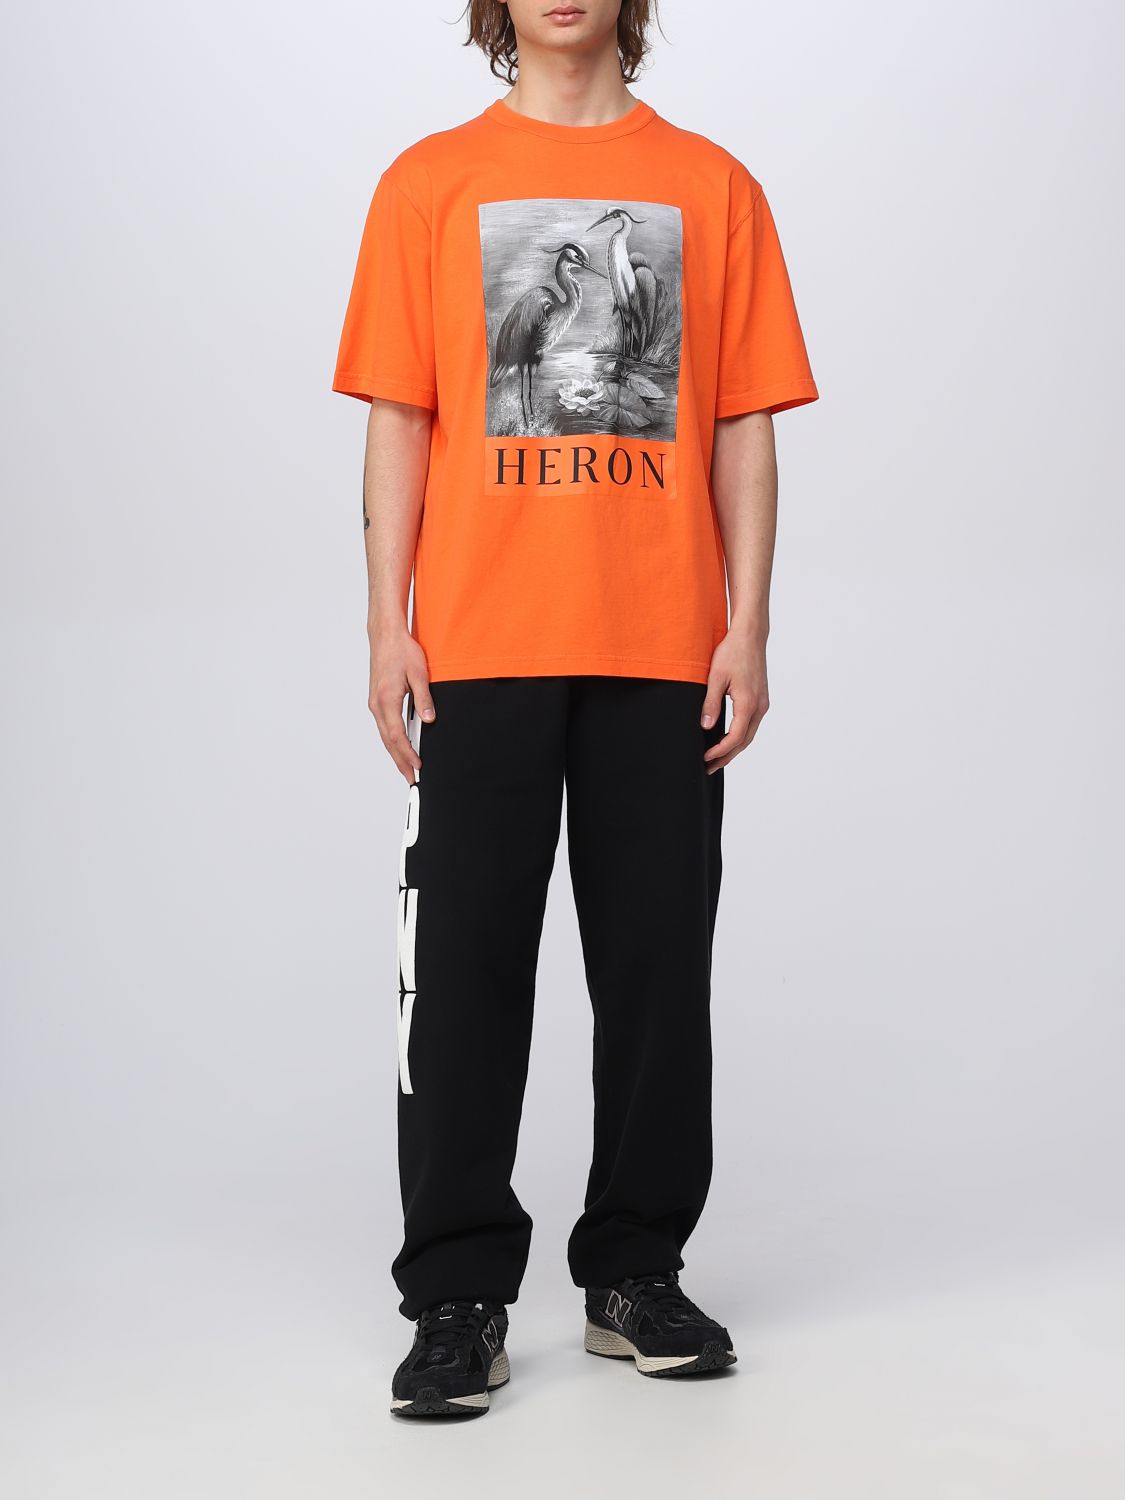 T-shirt Heron Preston: Heron Preston t-shirt for men orange 2